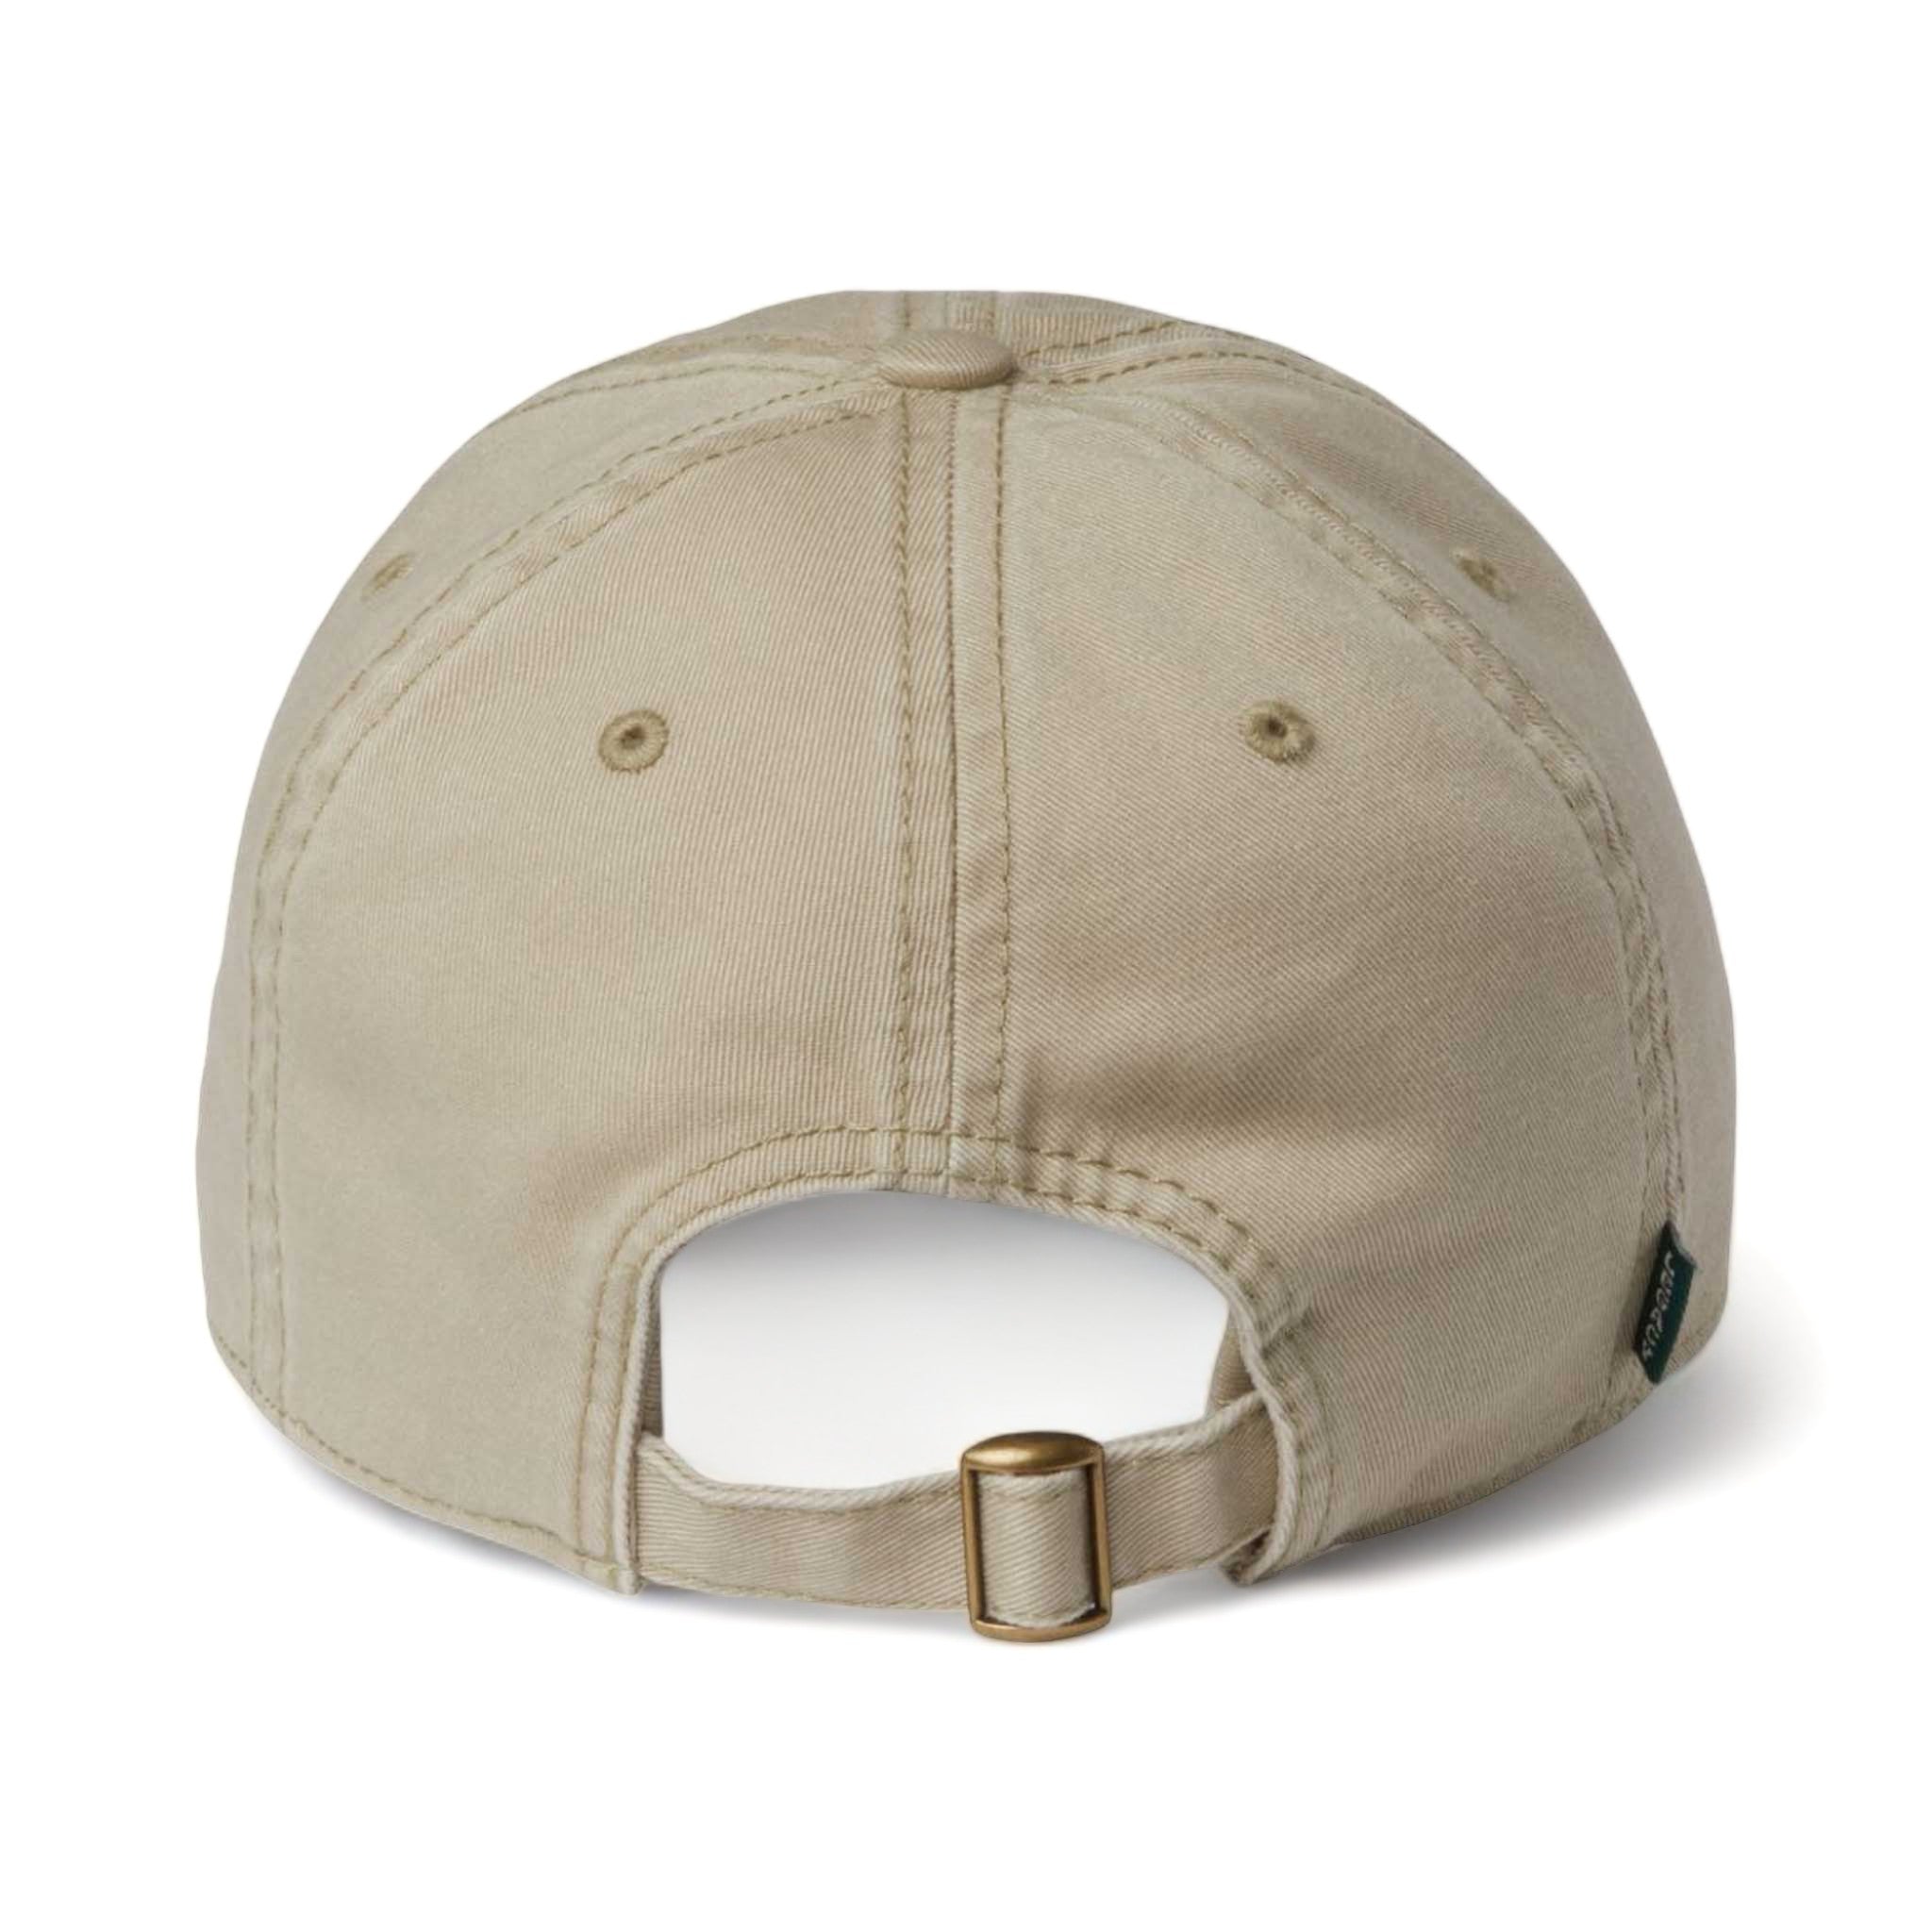 Back view of LEGACY EZA custom hat in khaki